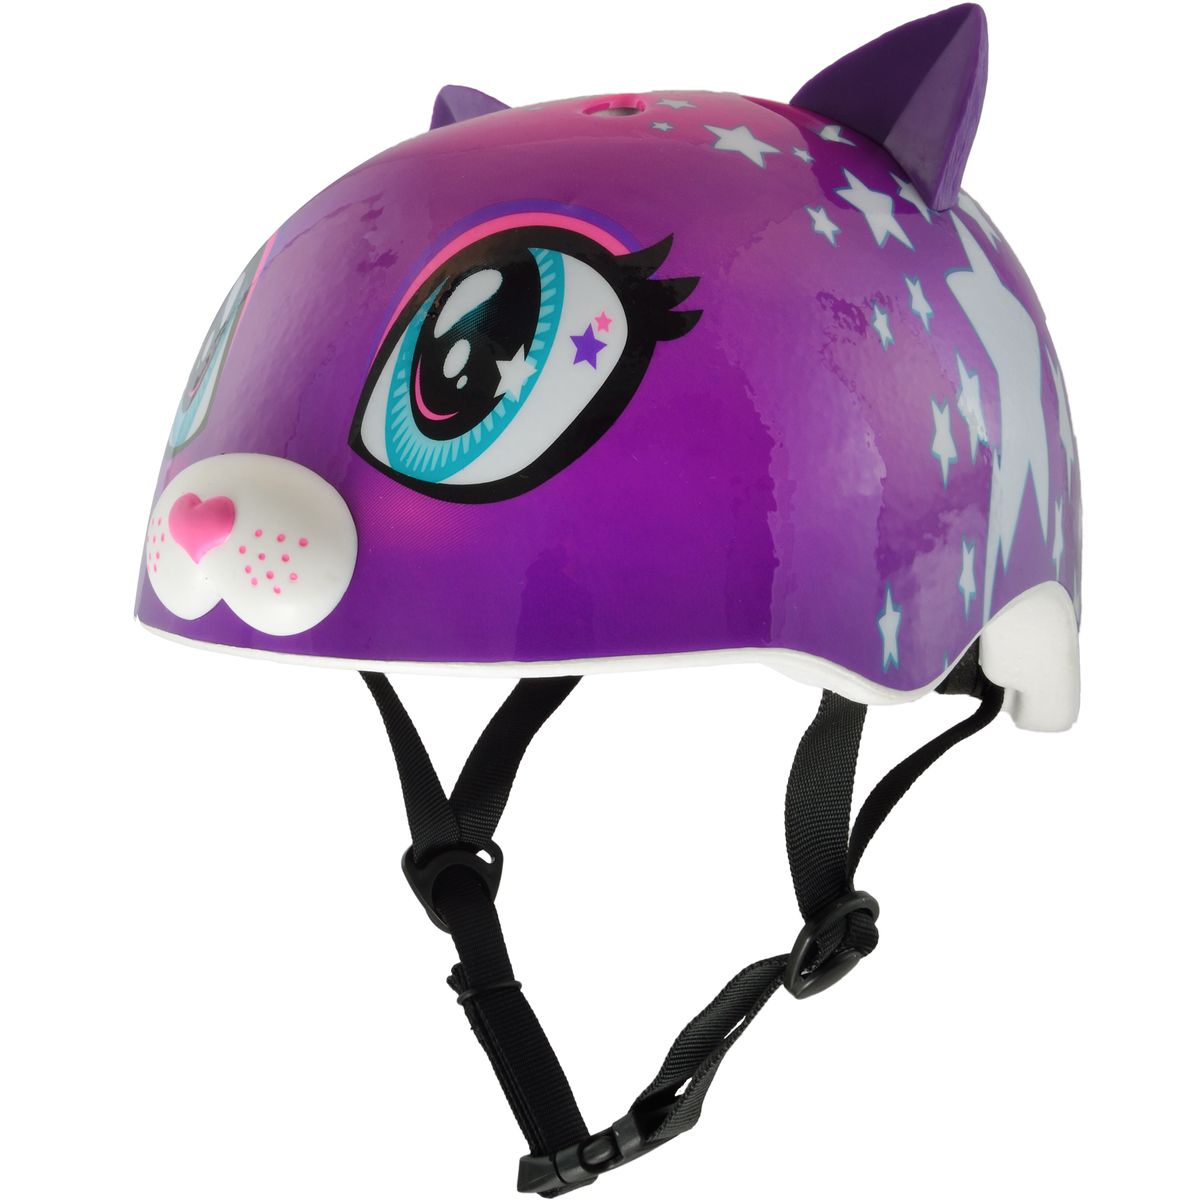 [RDY] [送料無料] Raskullz Star Kitty Bike Helmet, Child 5+ 50-54cm [楽天海外通販] | Raskullz Star Kitty Bike Helmet, Child 5+ 50-54cm